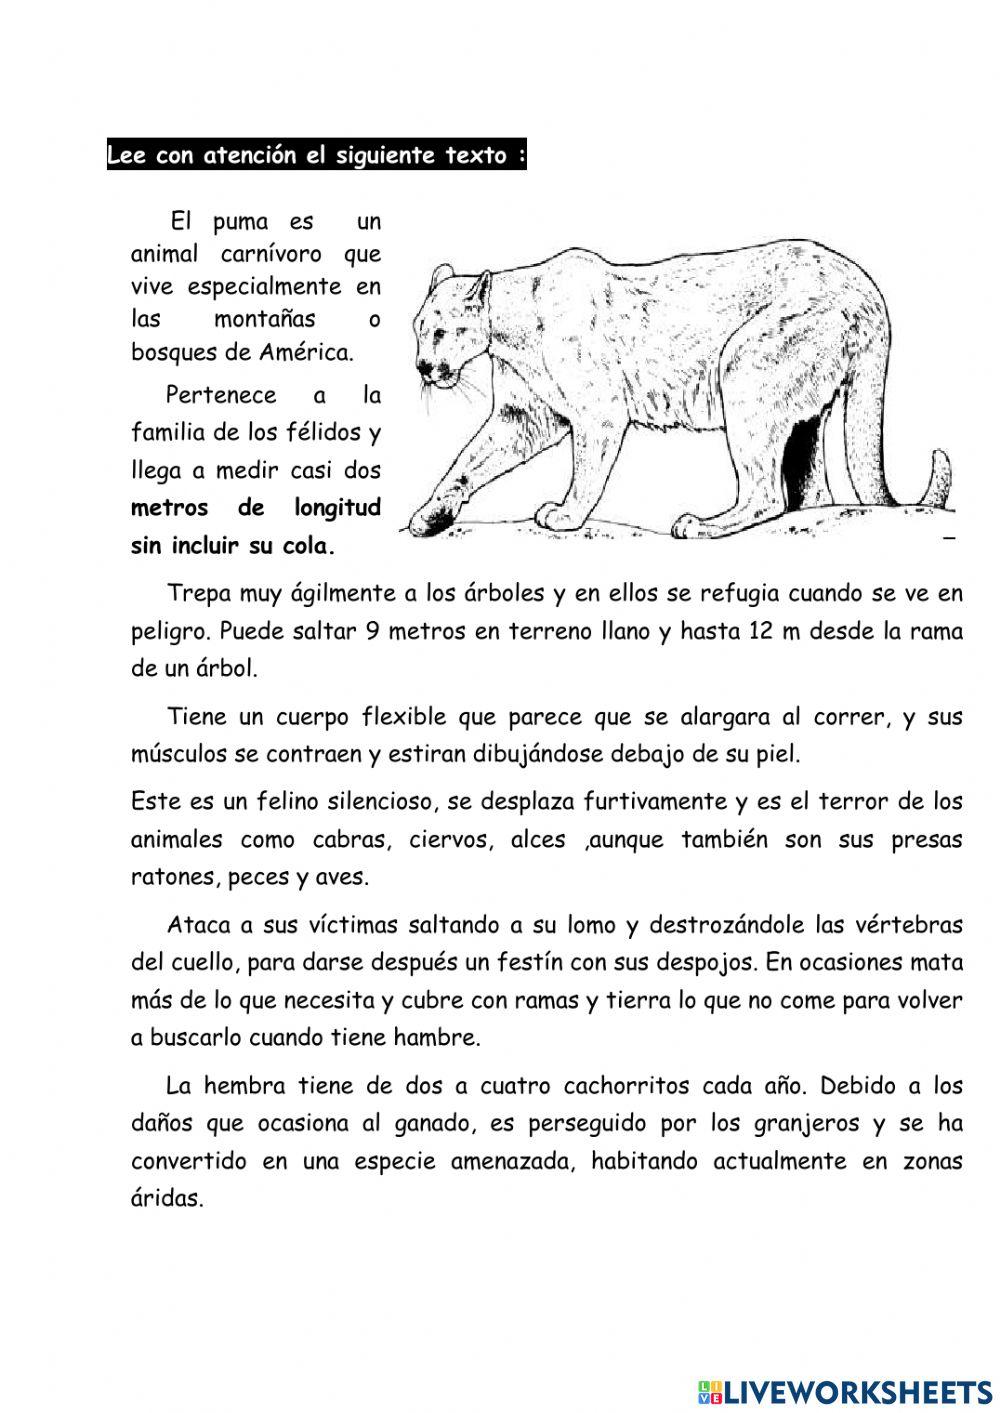 Leemos una descripción del puma worksheet | Live Worksheets